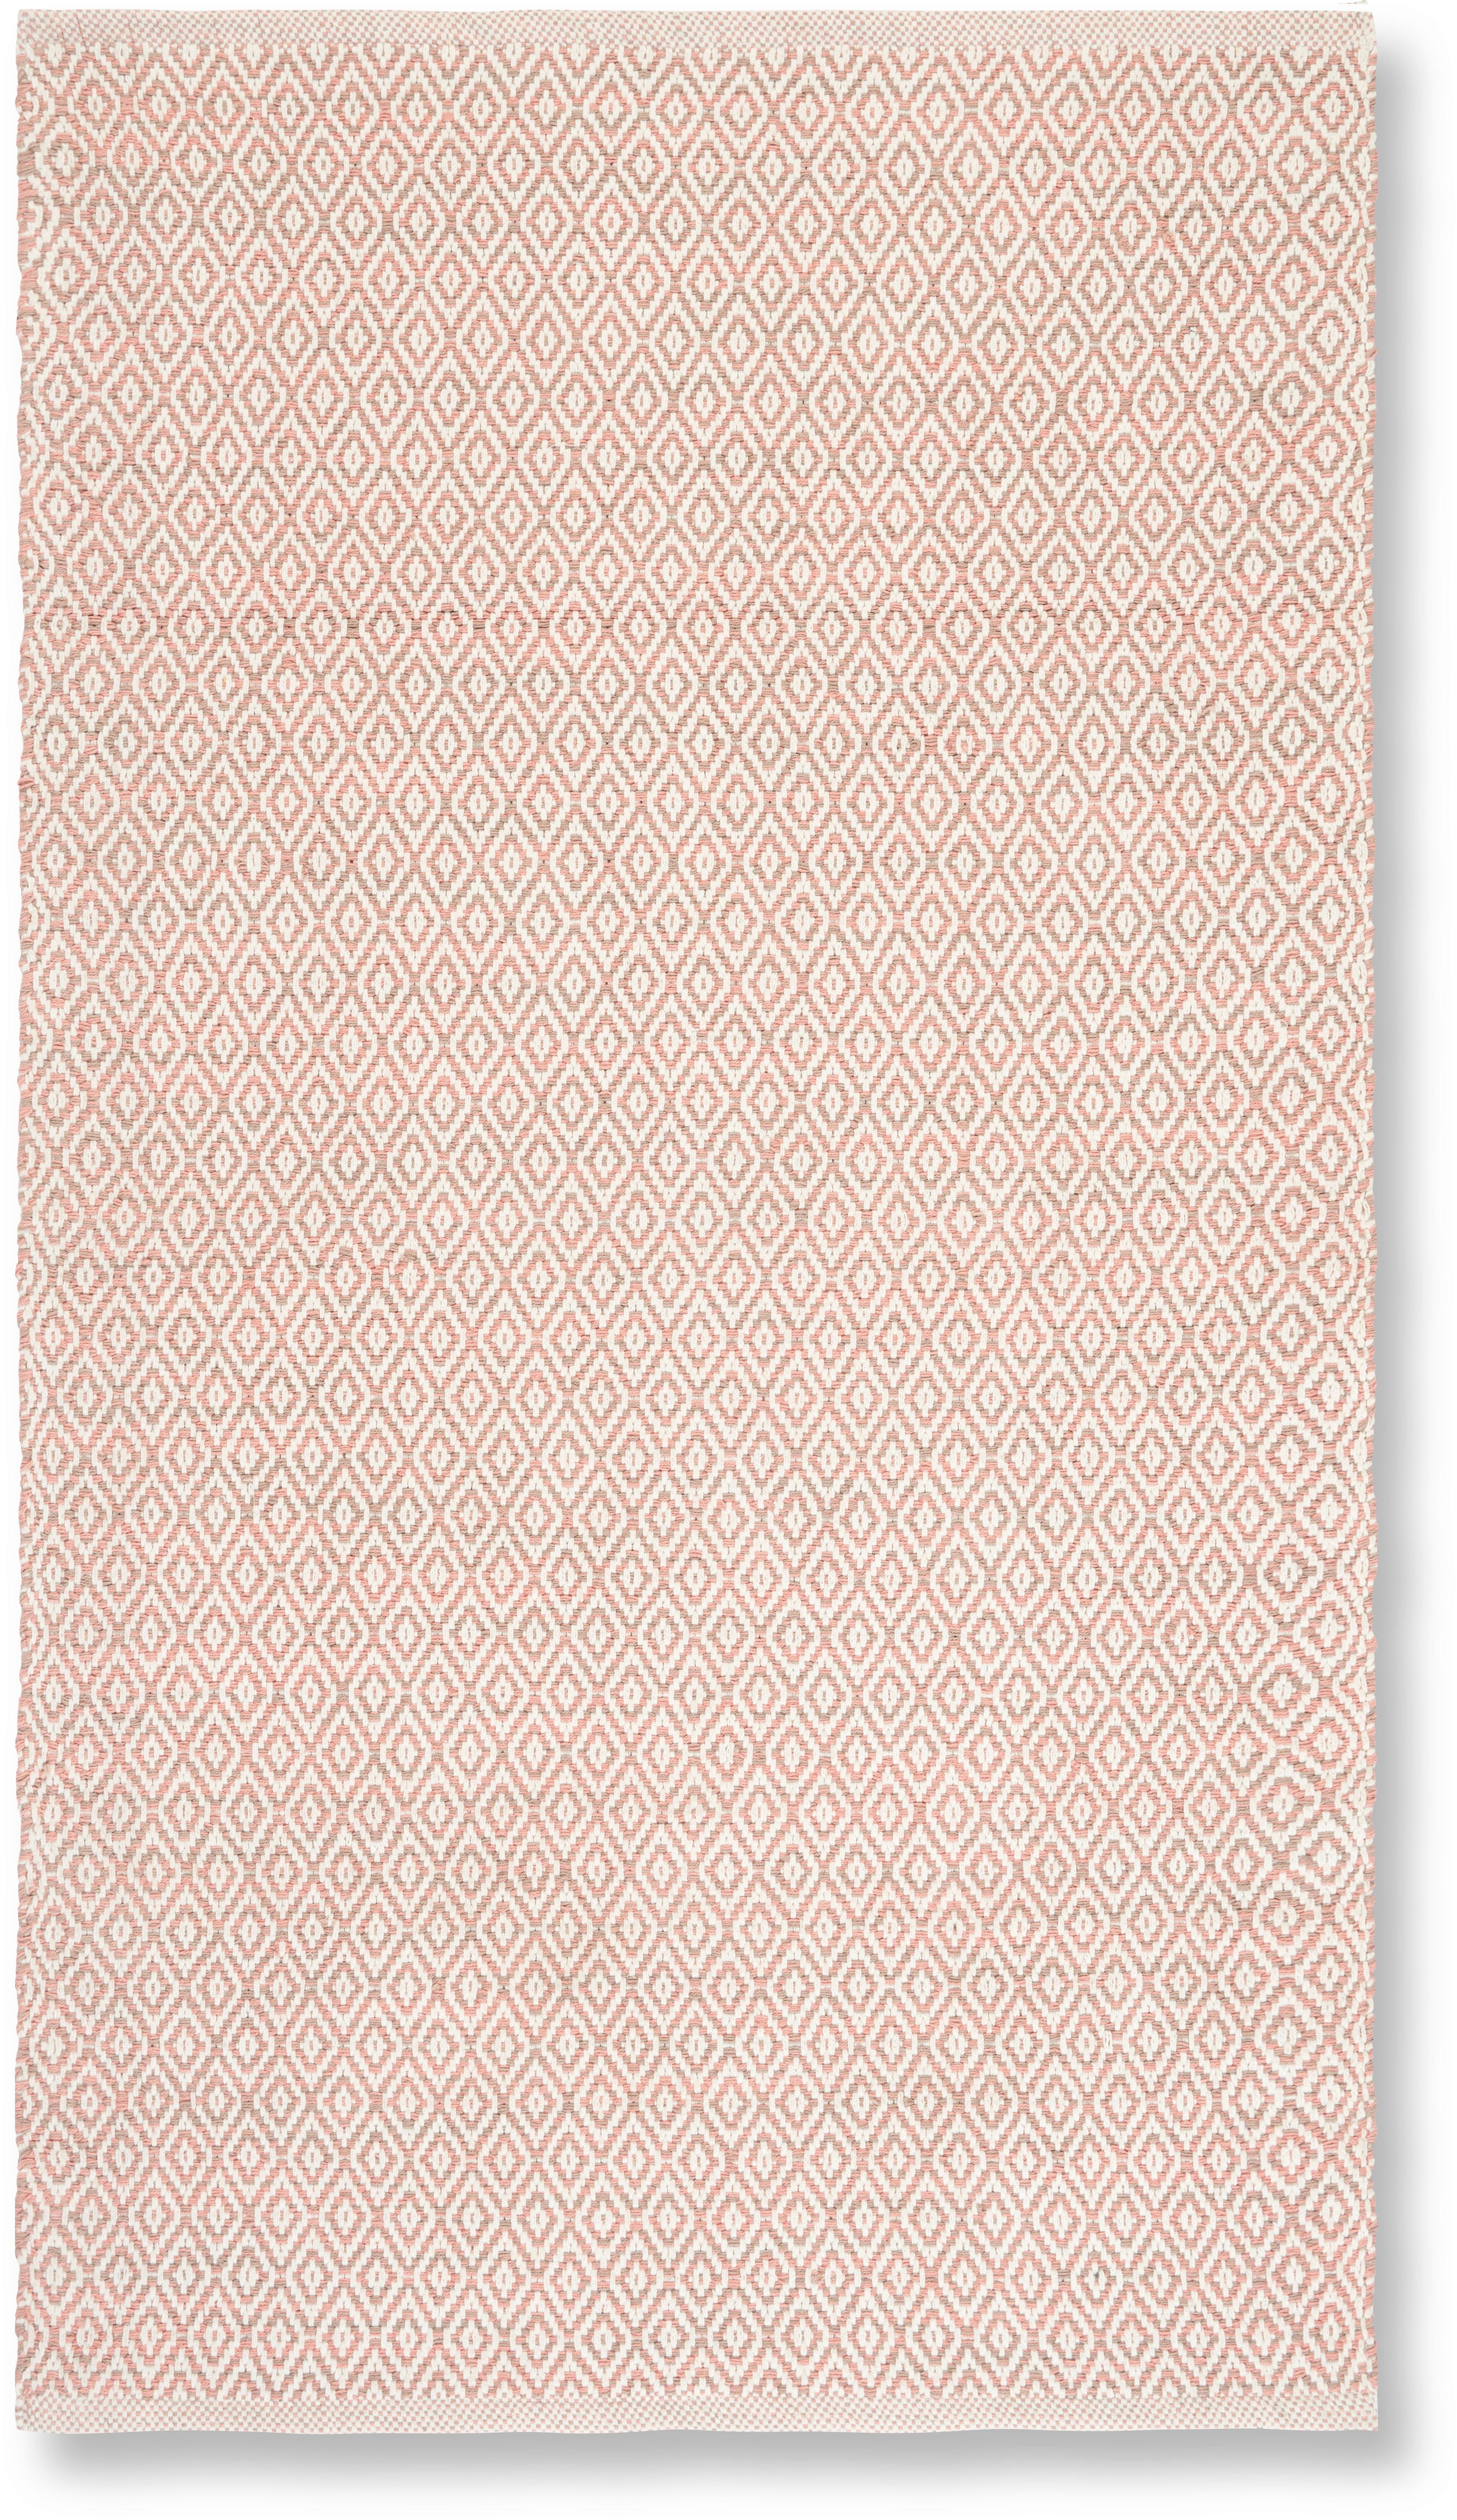 Handwebeteppich Carola in Rosa ca. 80x150cm